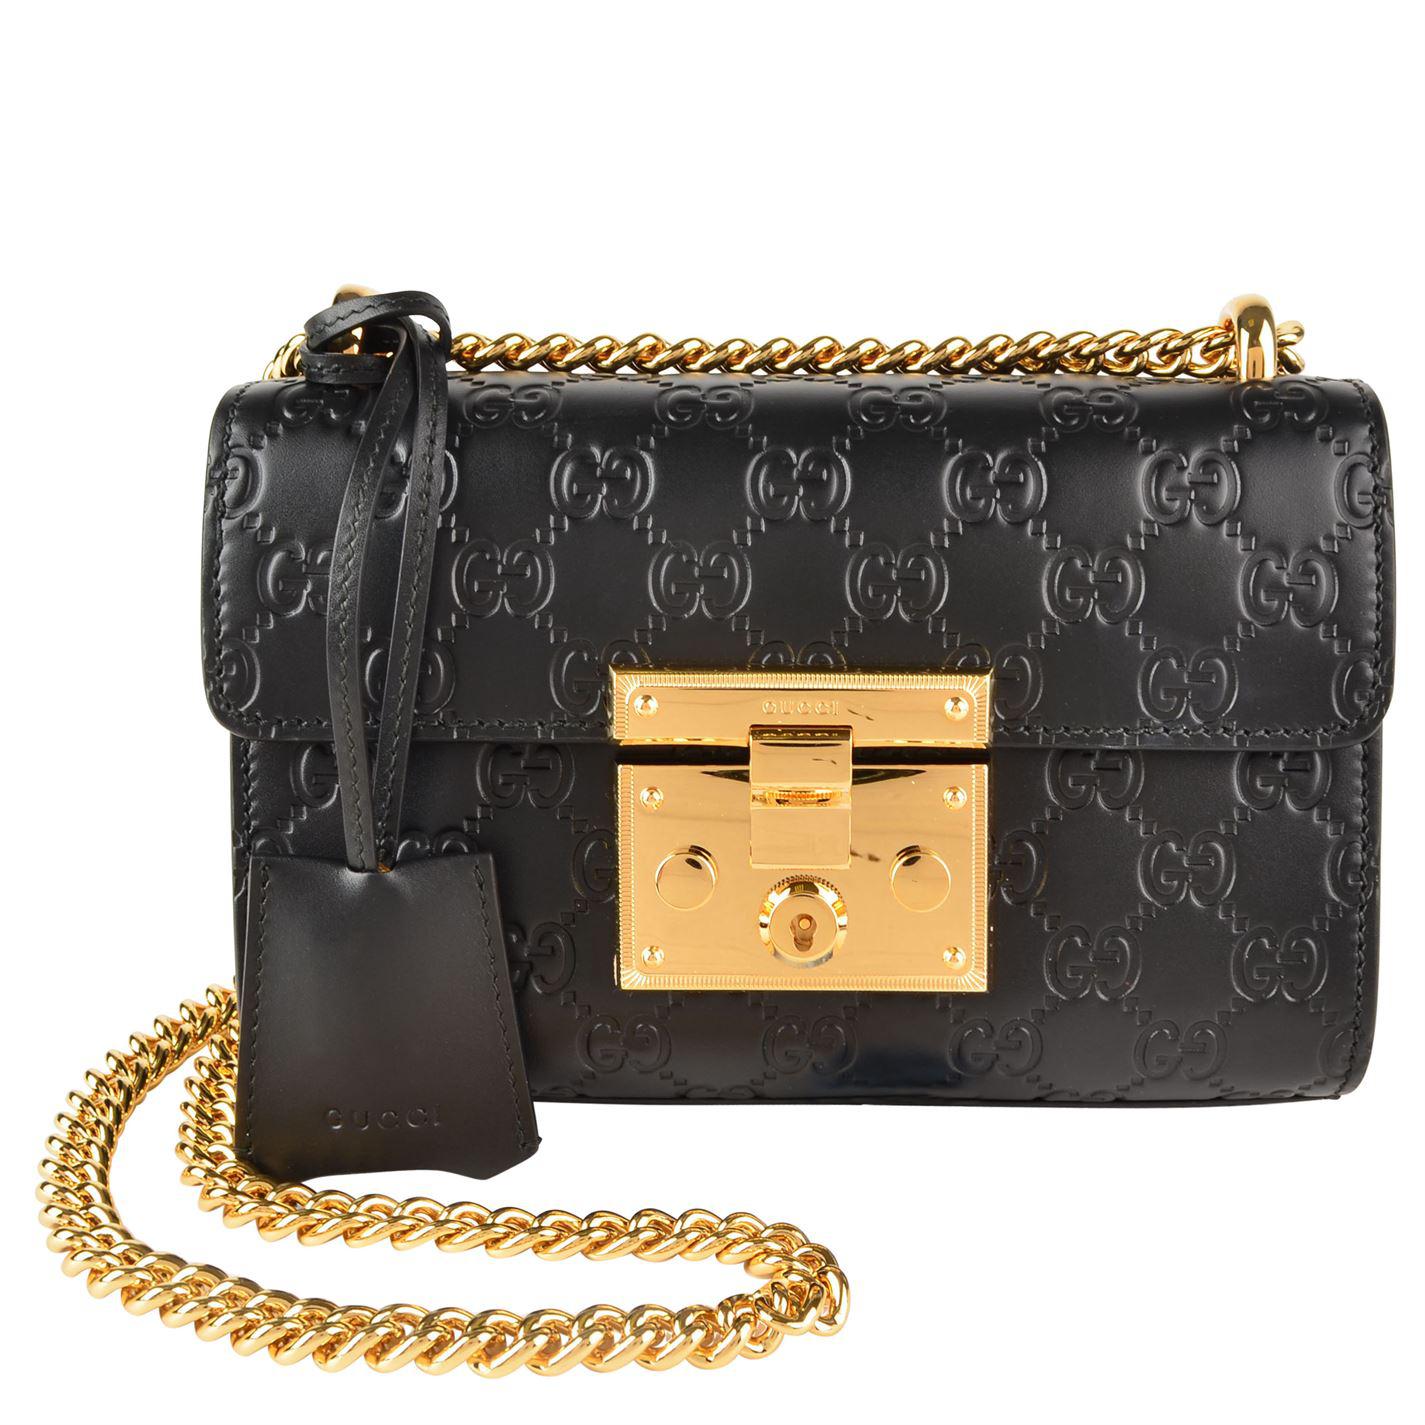 Gucci Leather Padlock Signature Shoulder Bag in Black - Lyst